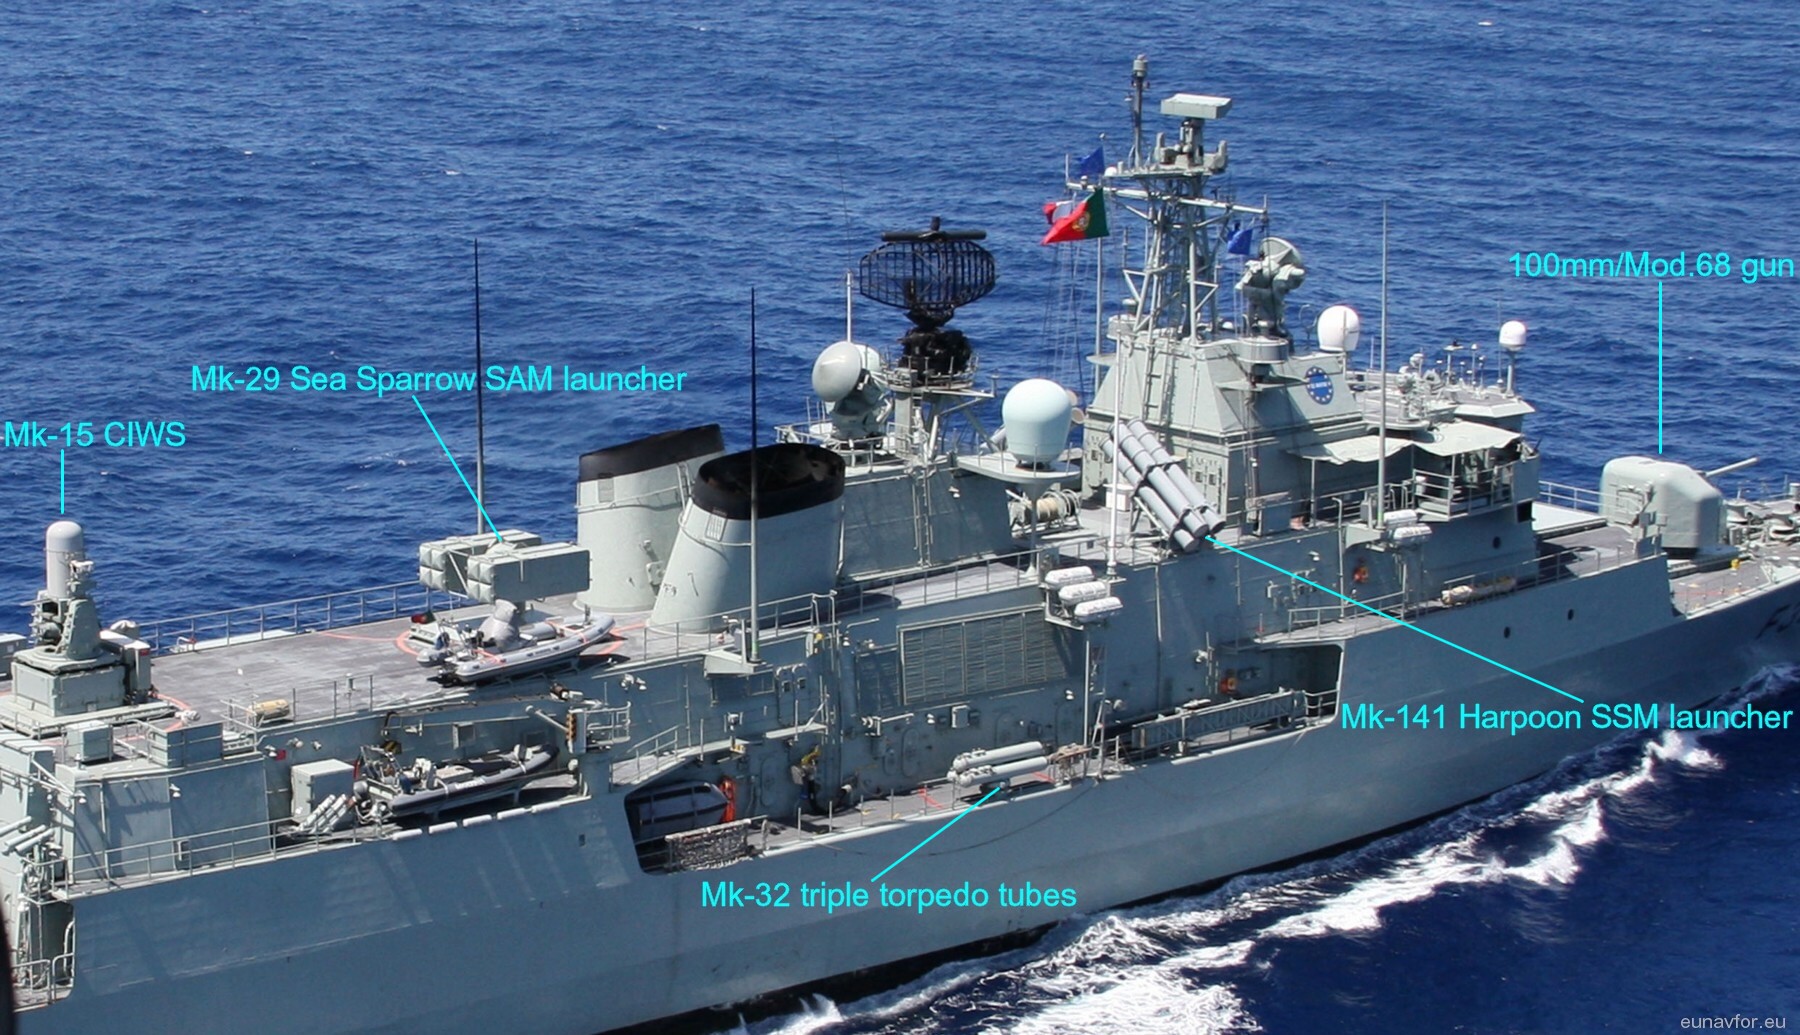 vasco da gama class meko 200pn frigate portuguese navy armament 100mm model 68 gun rgm-84 harpoon ssm missile rim-7 sea sparrow sam torpedo mk-15 ciws